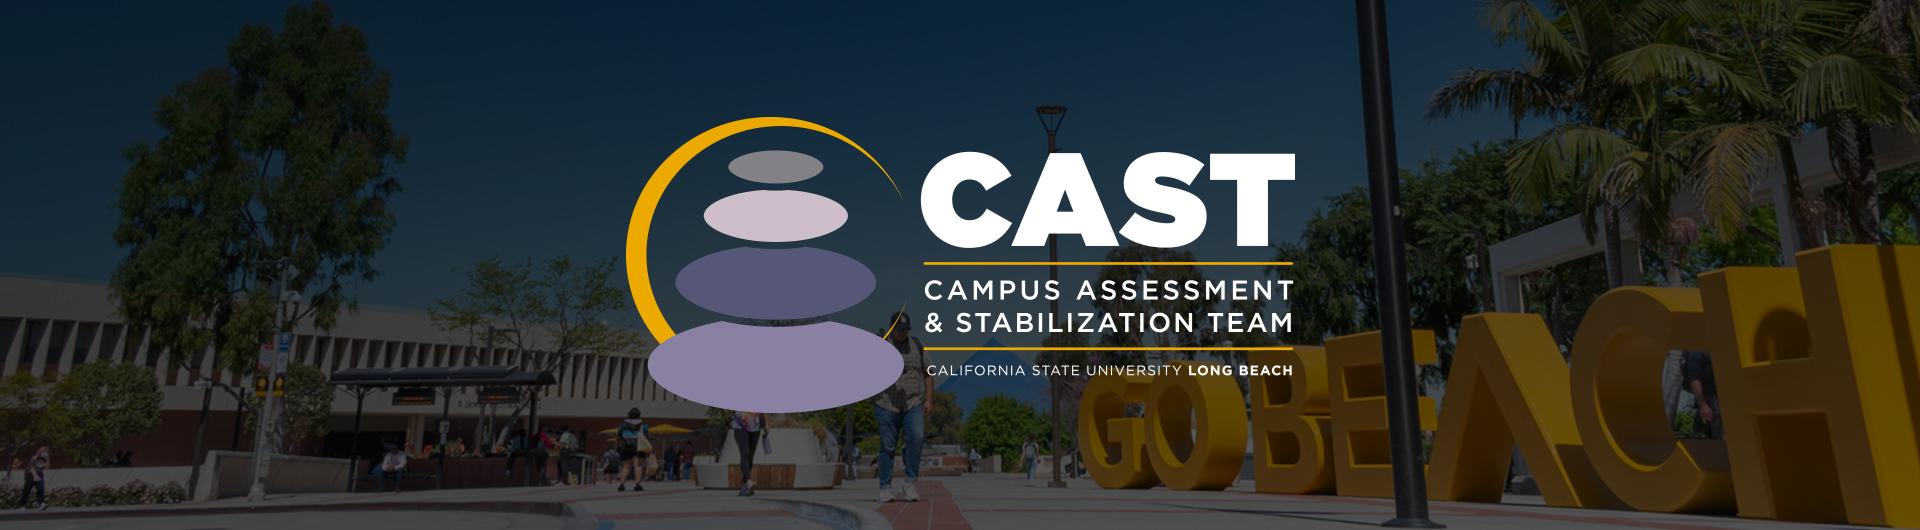 Campus Assessment & Stabilization Team